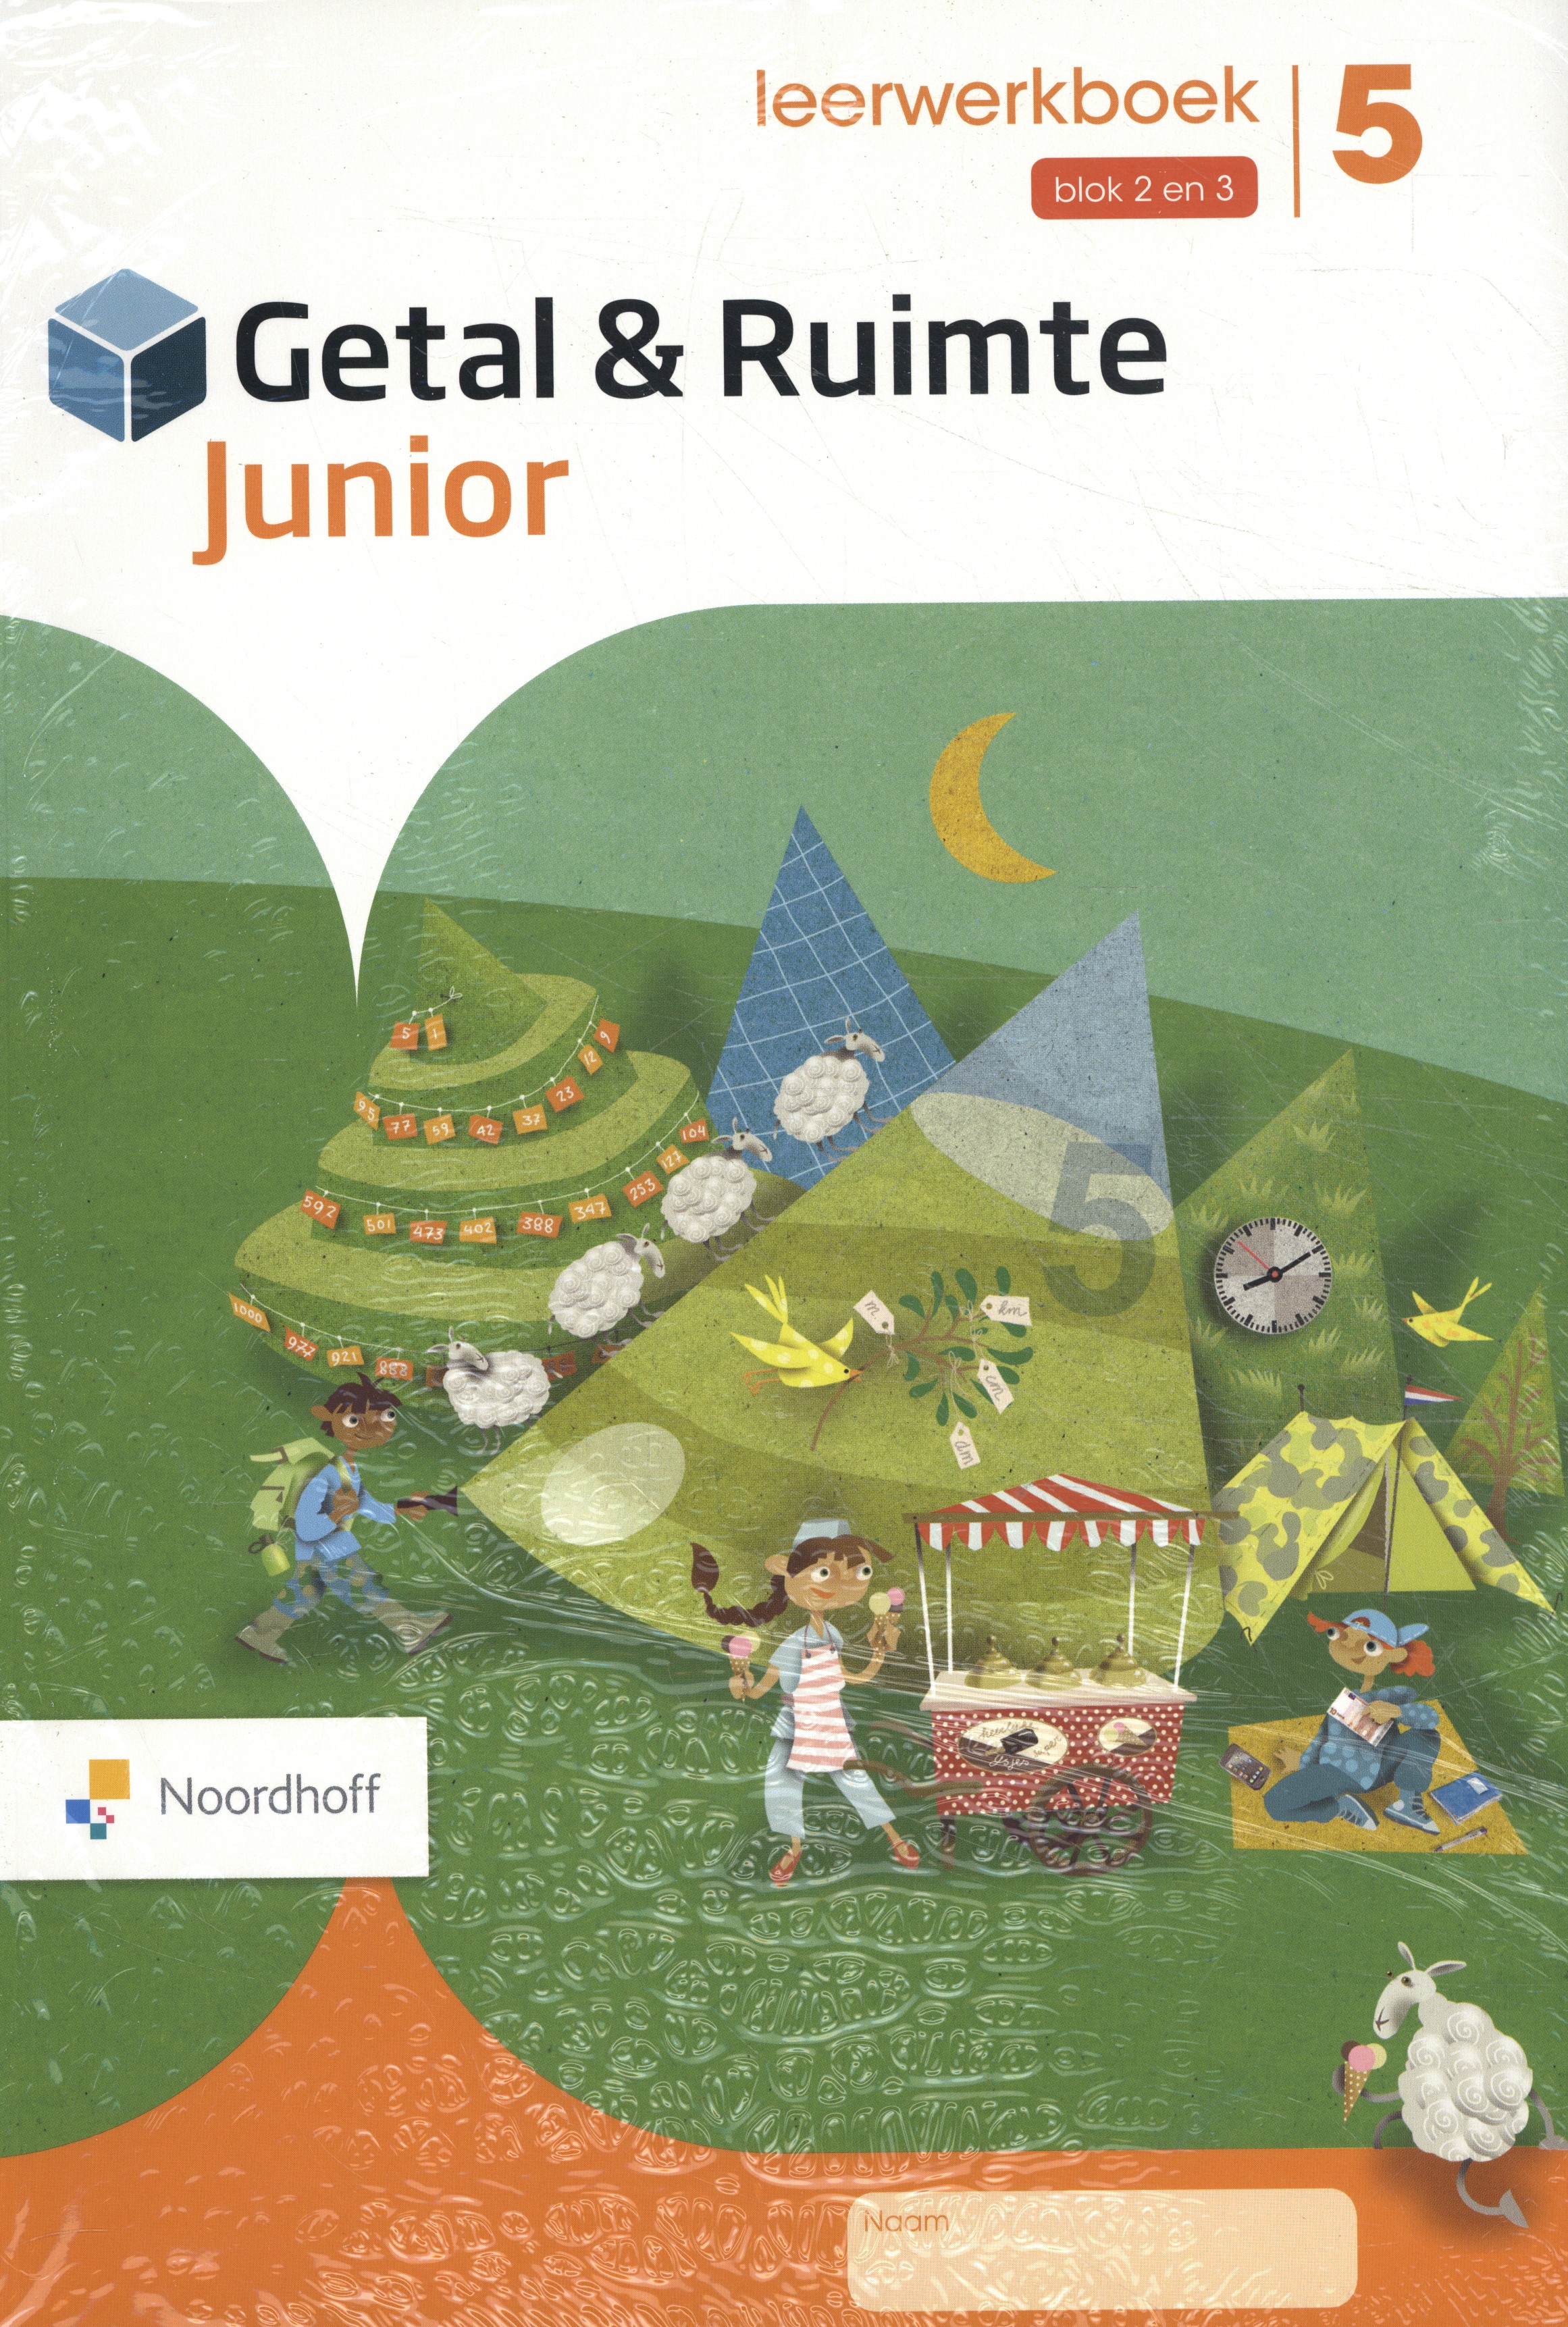 Getal & Ruimte Junior set 5 ex 5 blok 2 en 3 leerwerkboek